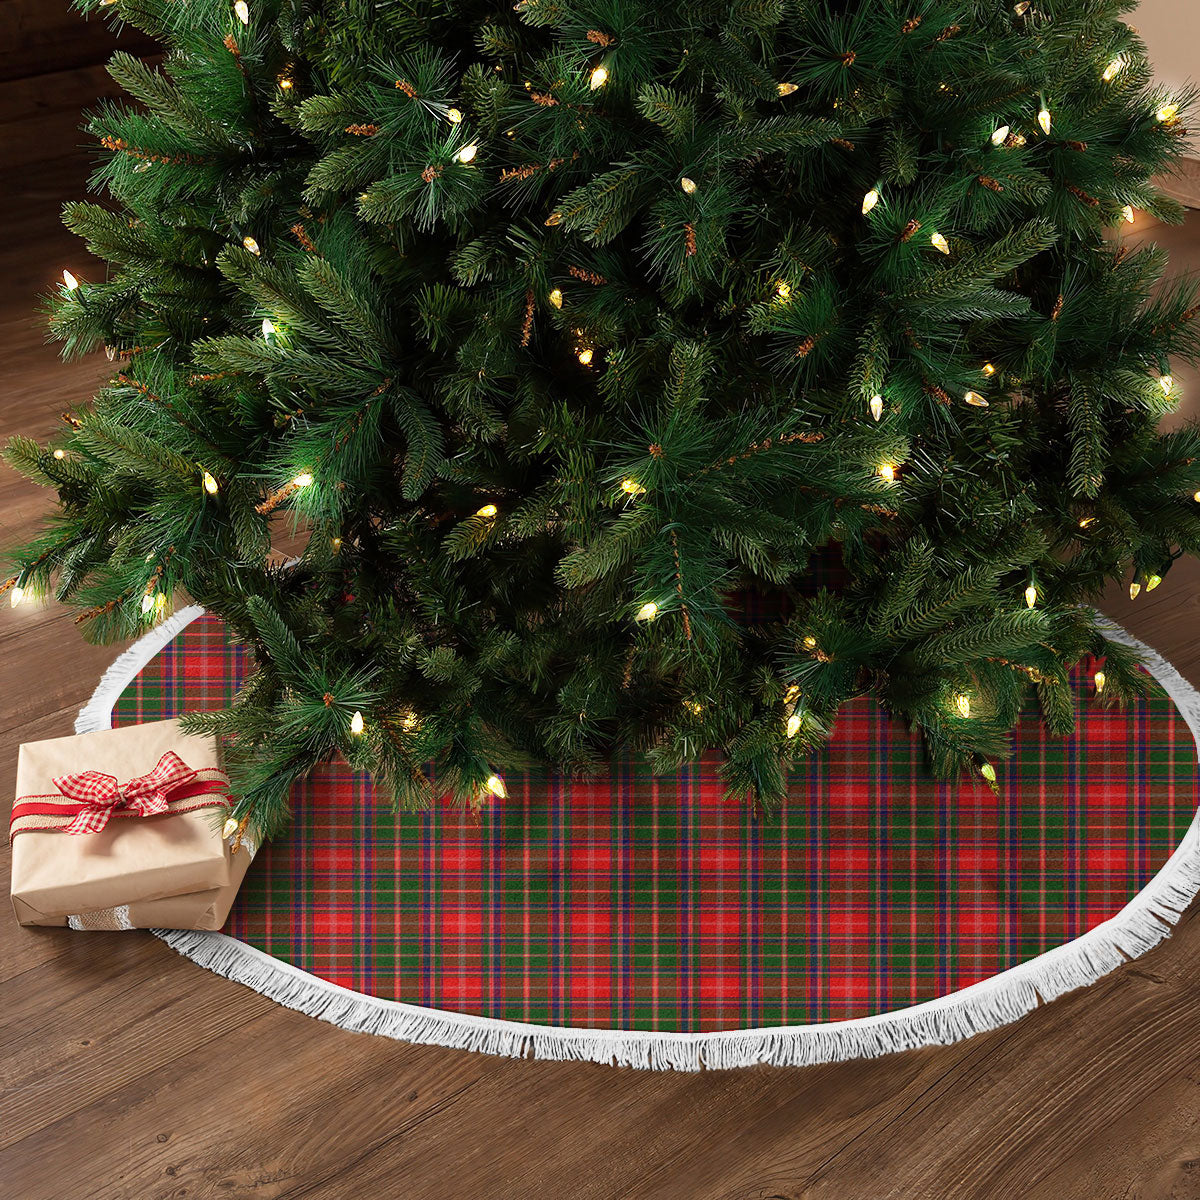 Somerville Tartan Christmas Tree Skirt